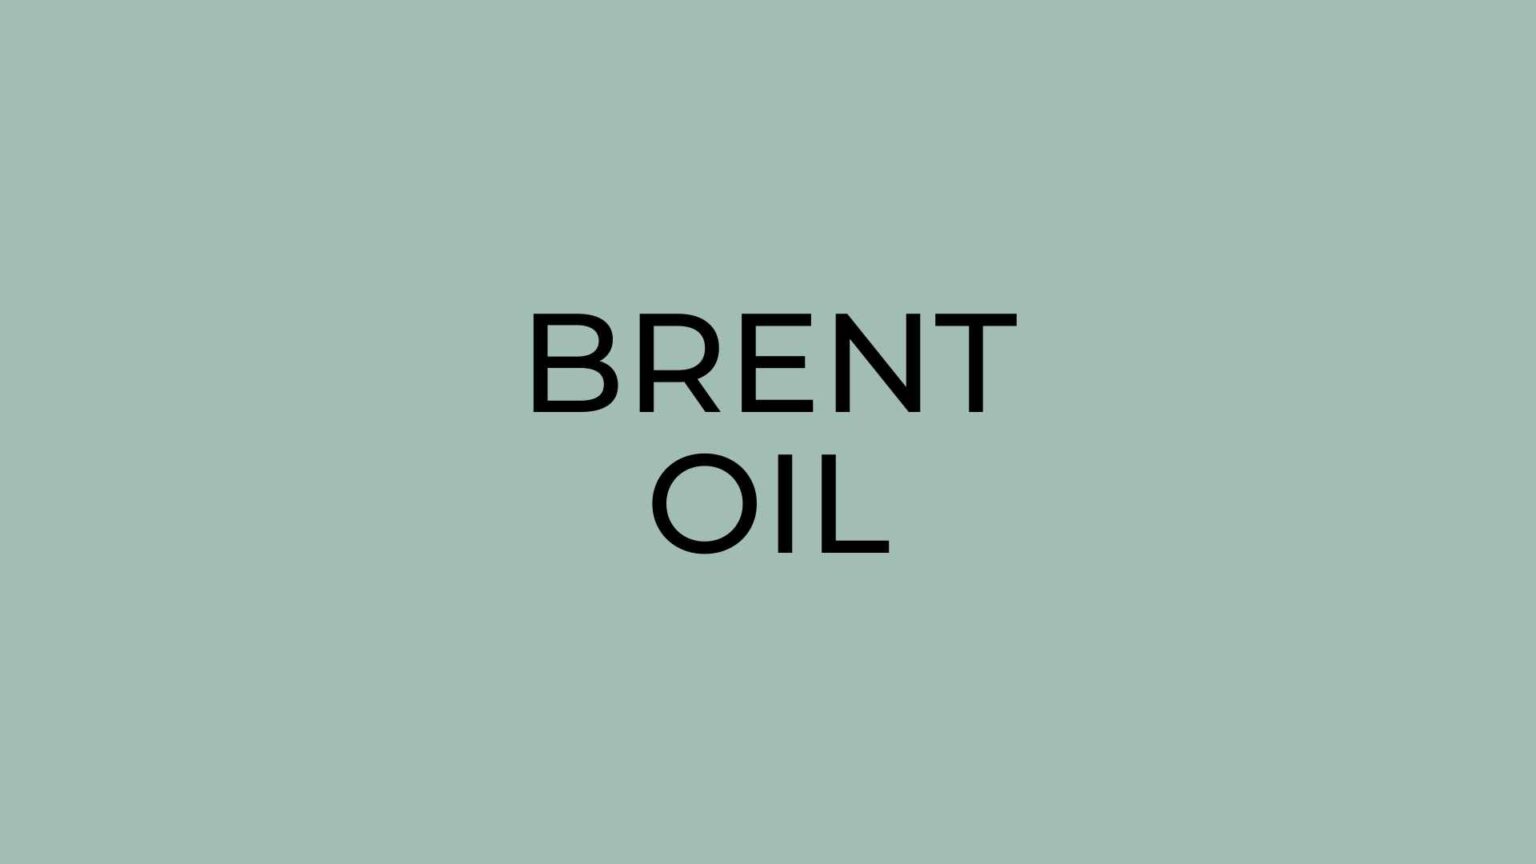 Brent crude oil price today .68+0.12 (+0.16%) – 25 Jun 21